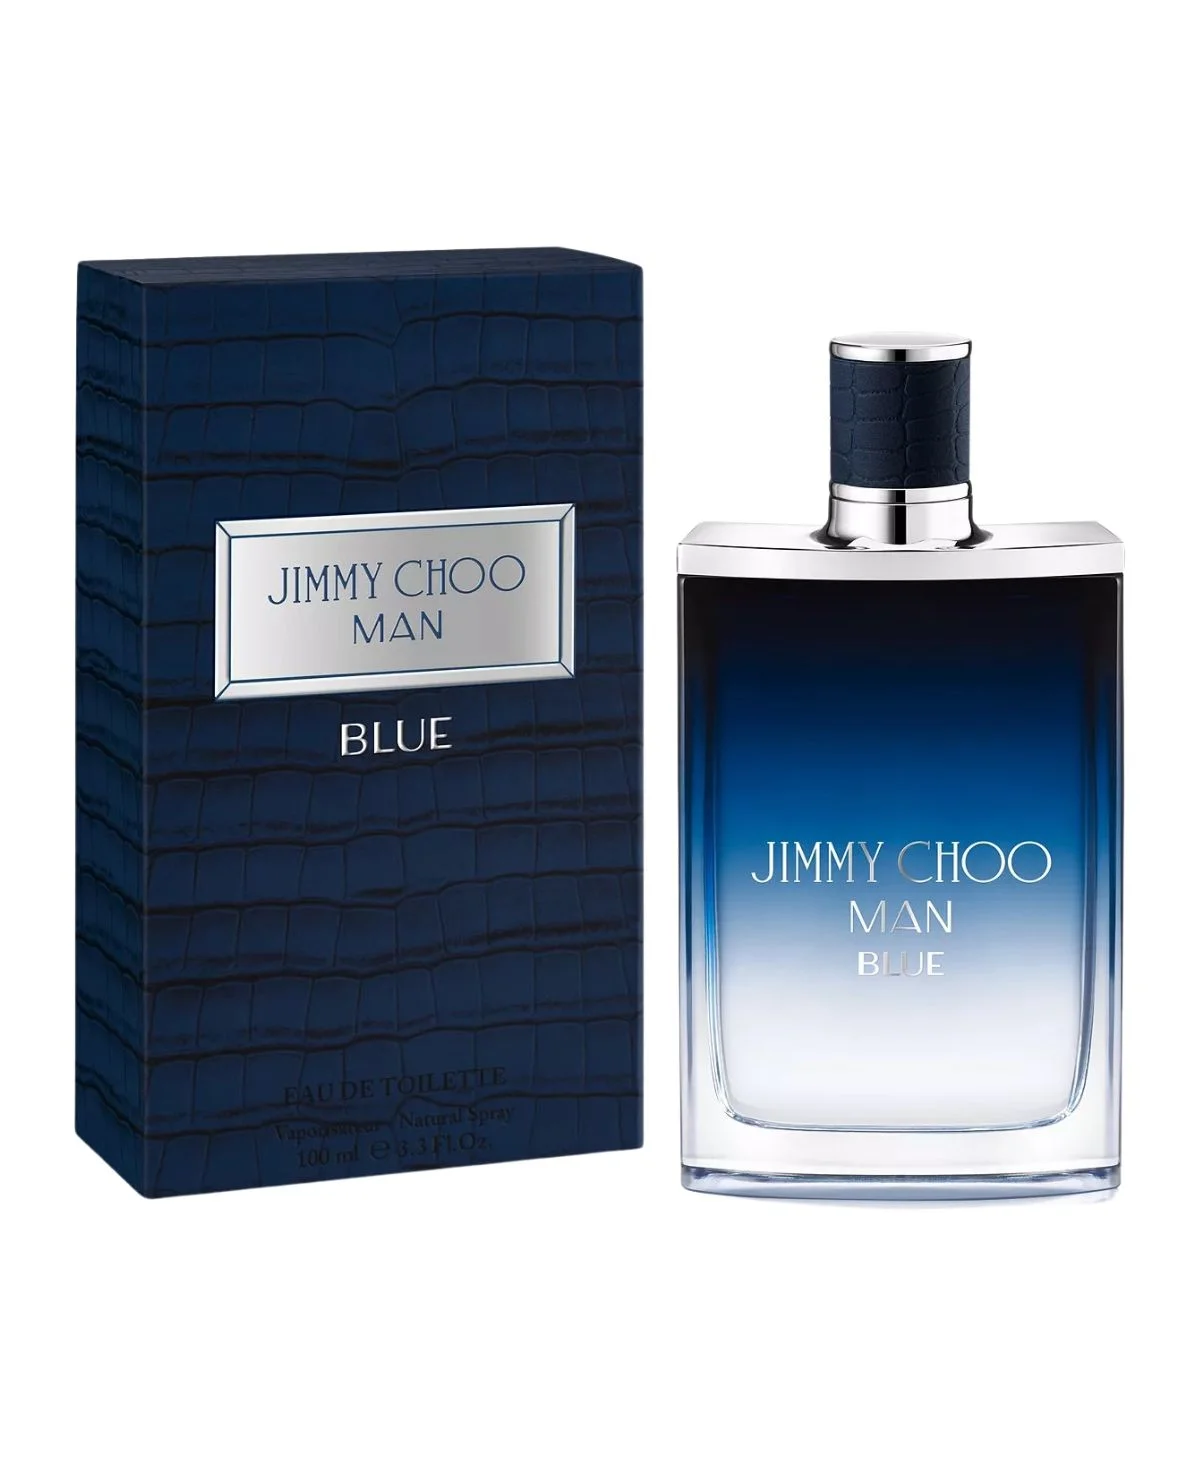 Jimmy Choo Man Blue for Men Eau de Toilette (EDT) Spray 3.4 oz (100 ml) 3386460067508